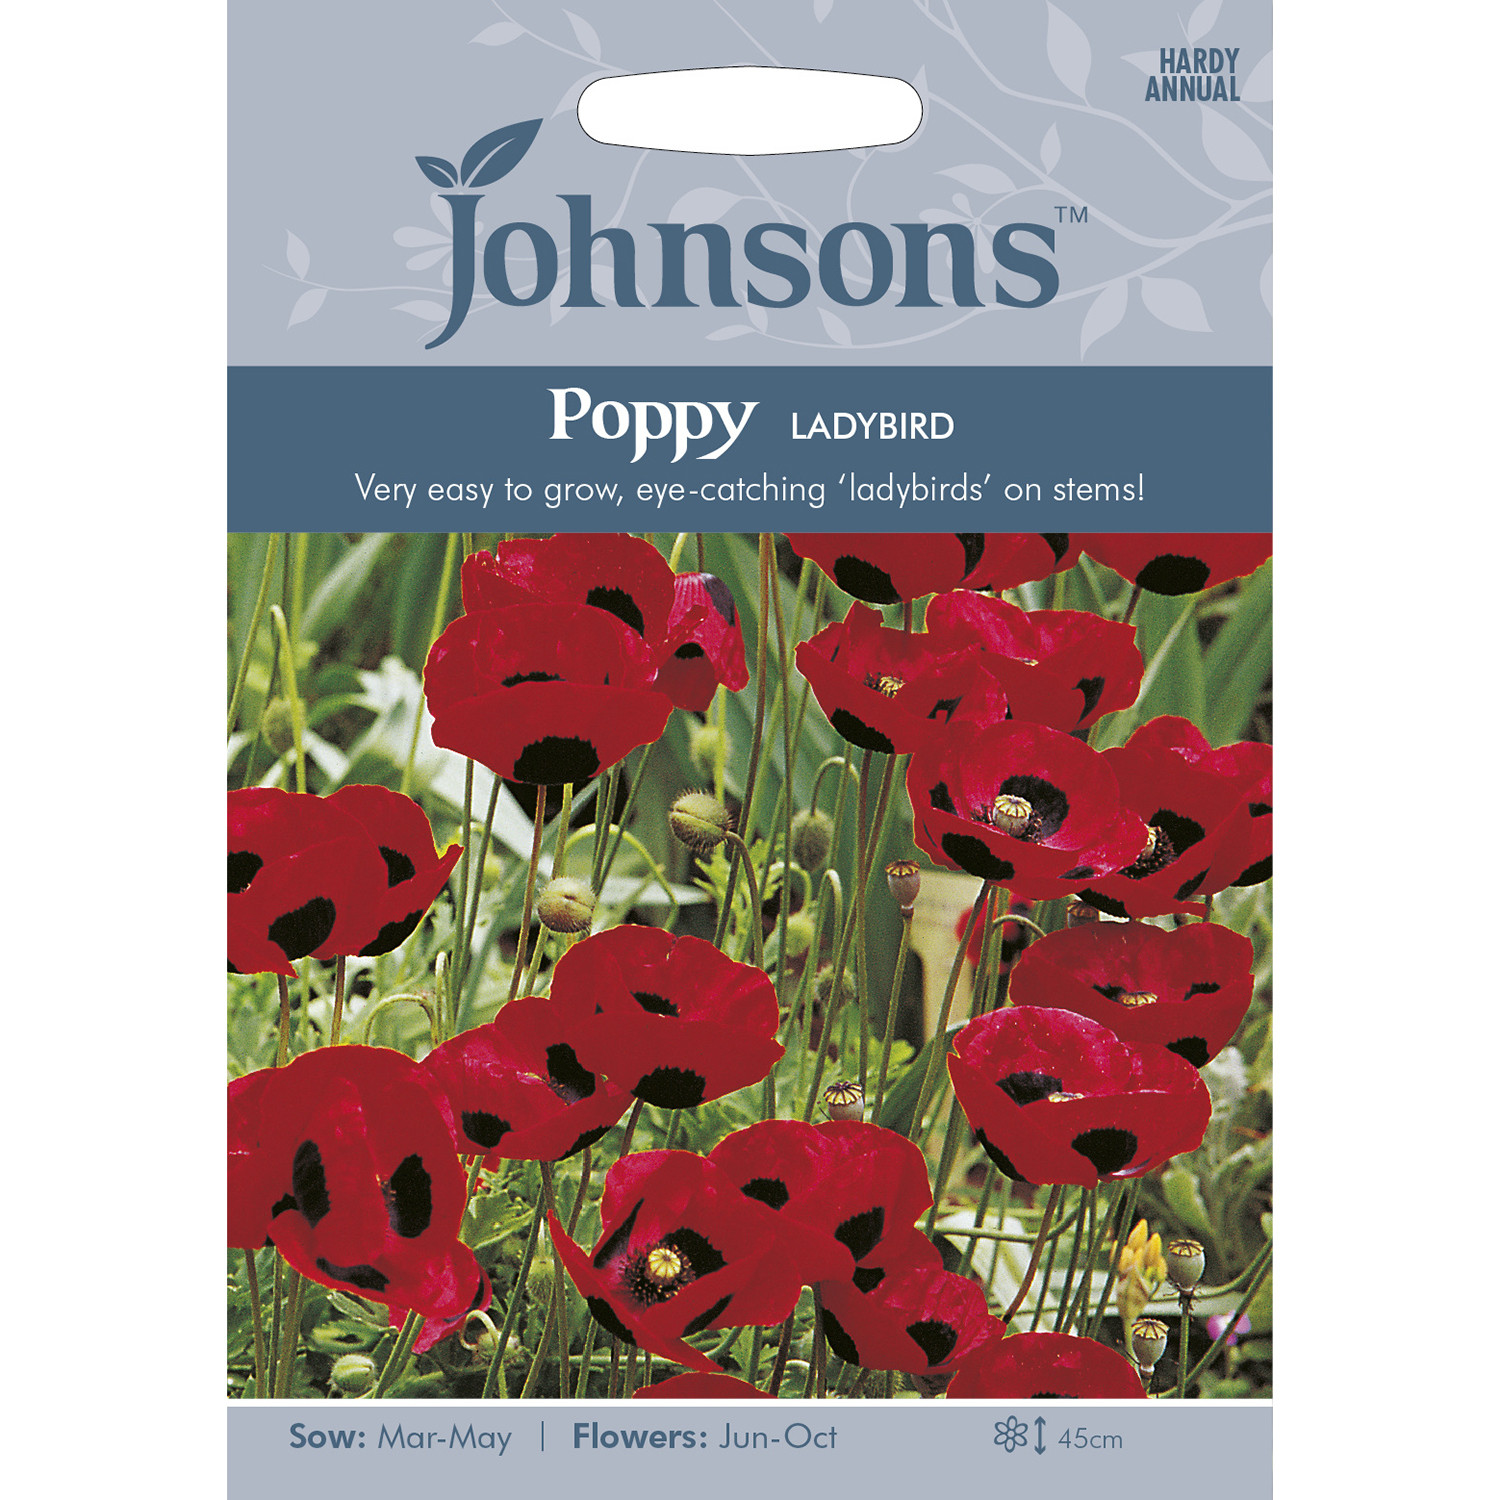 Johnsons Poppy Ladybird Flower Seeds Image 2